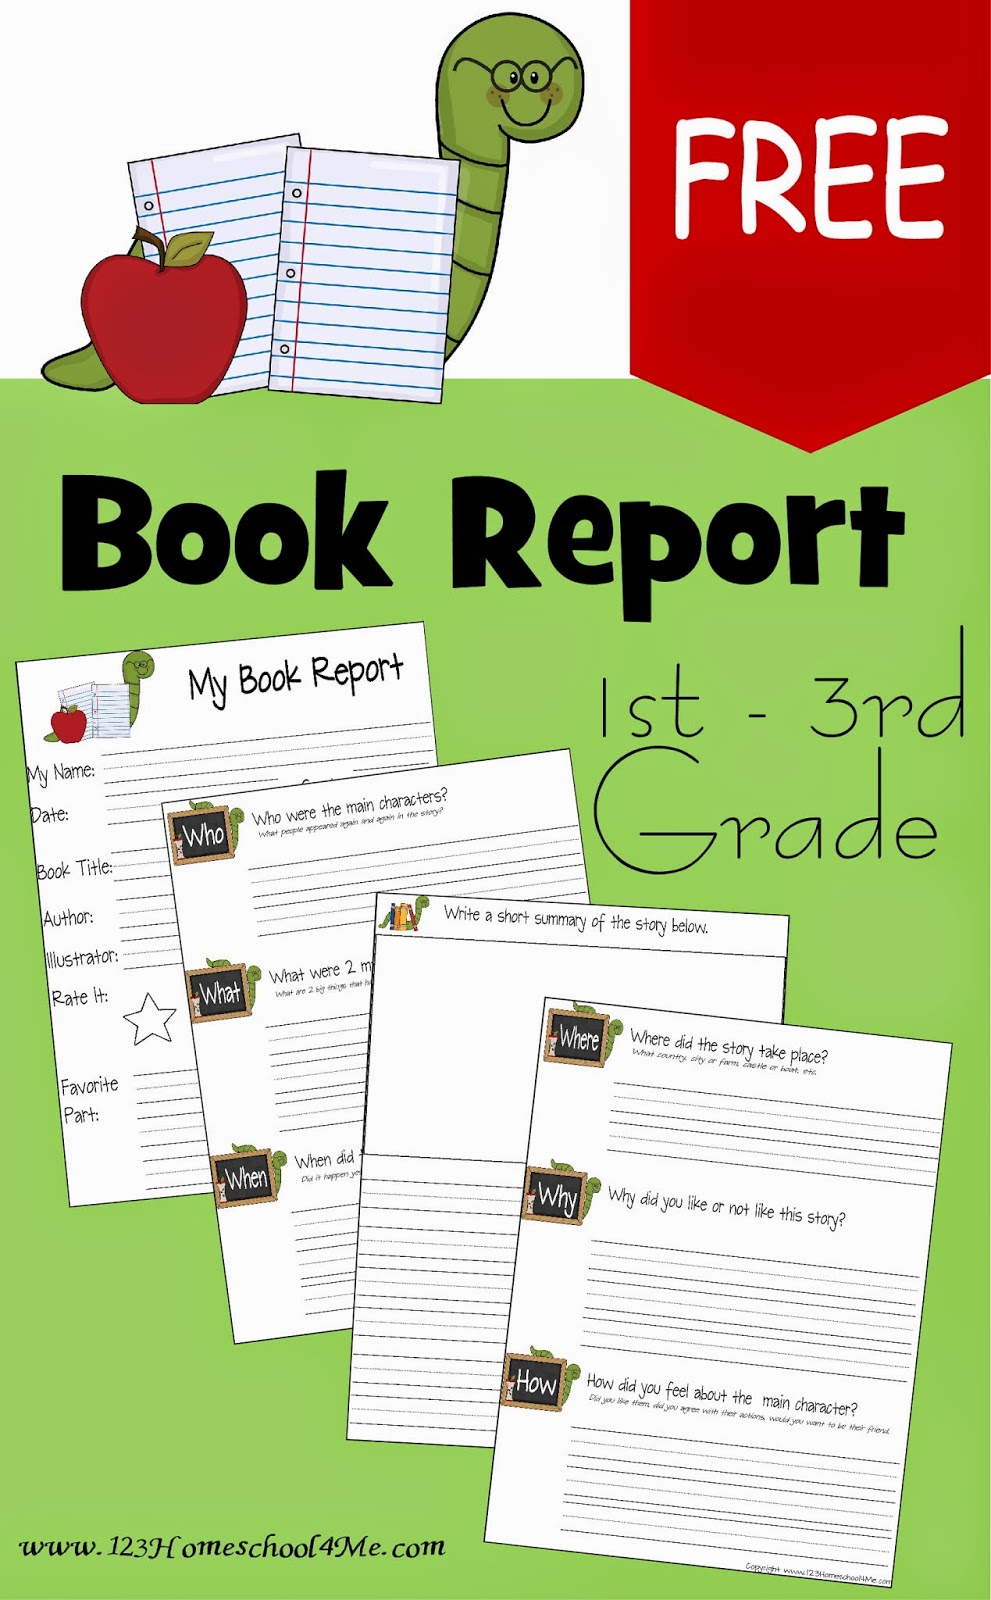 FREE Book Report Template - Educational Freebies With Book Report Template 2nd Grade